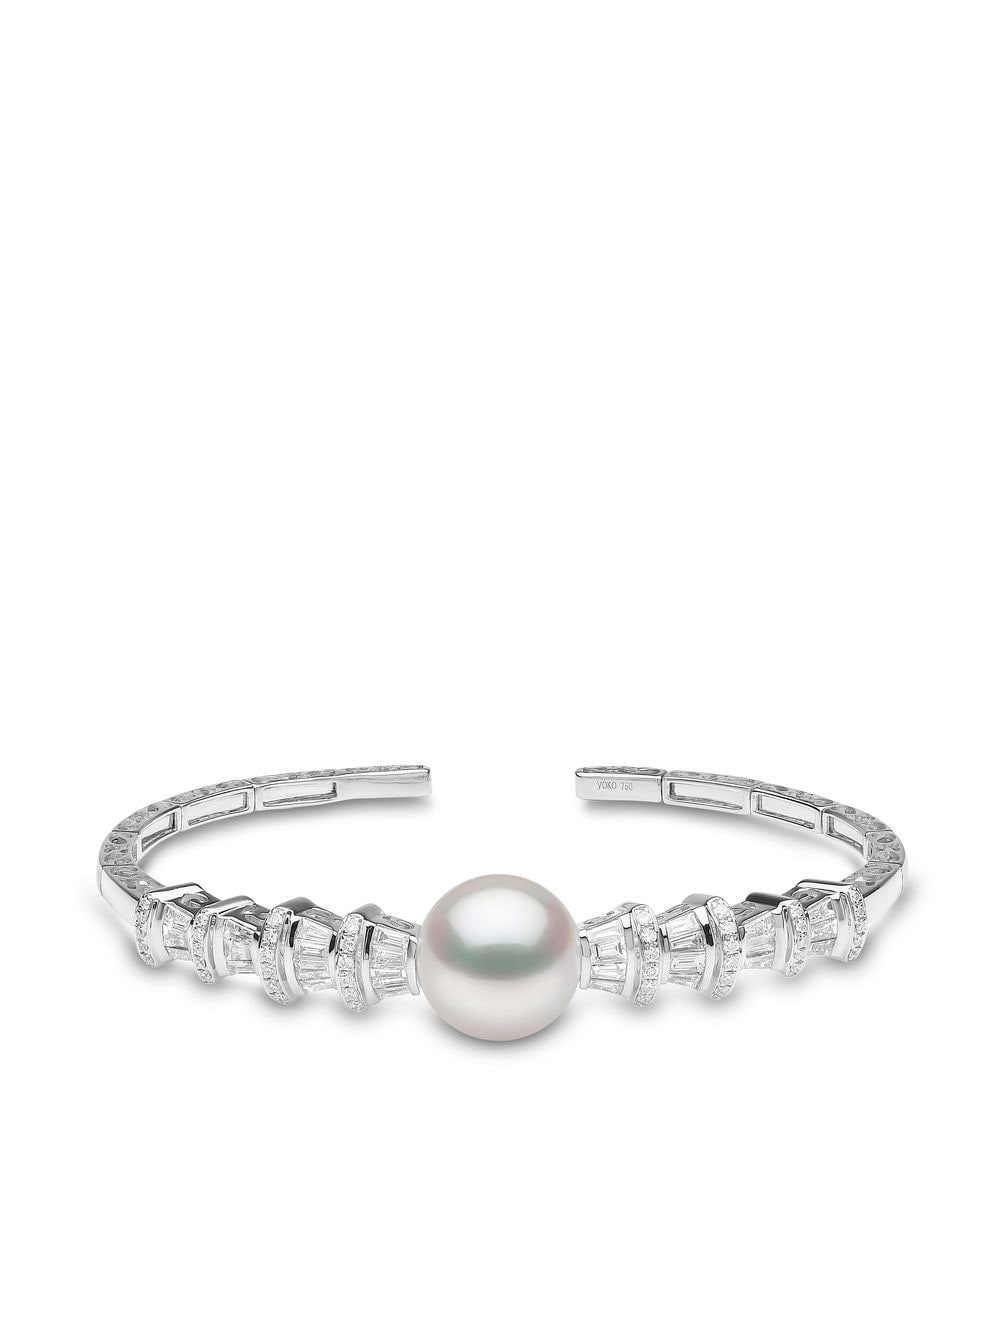 18kt white gold Starlight South Sea pearl and diamond bracelet